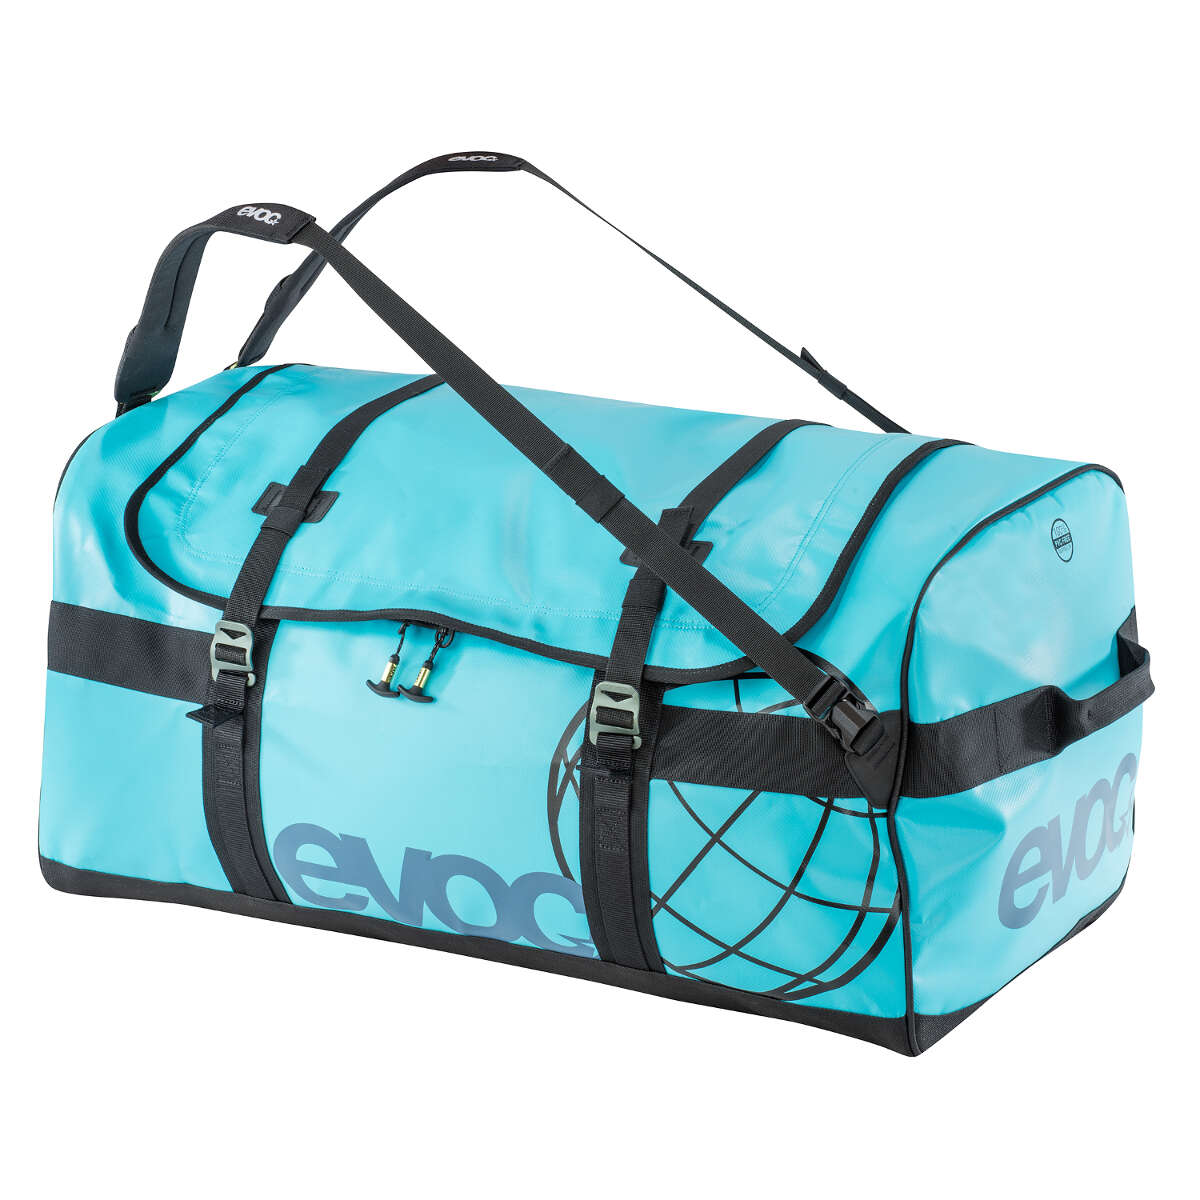 travel duffle bag in blue